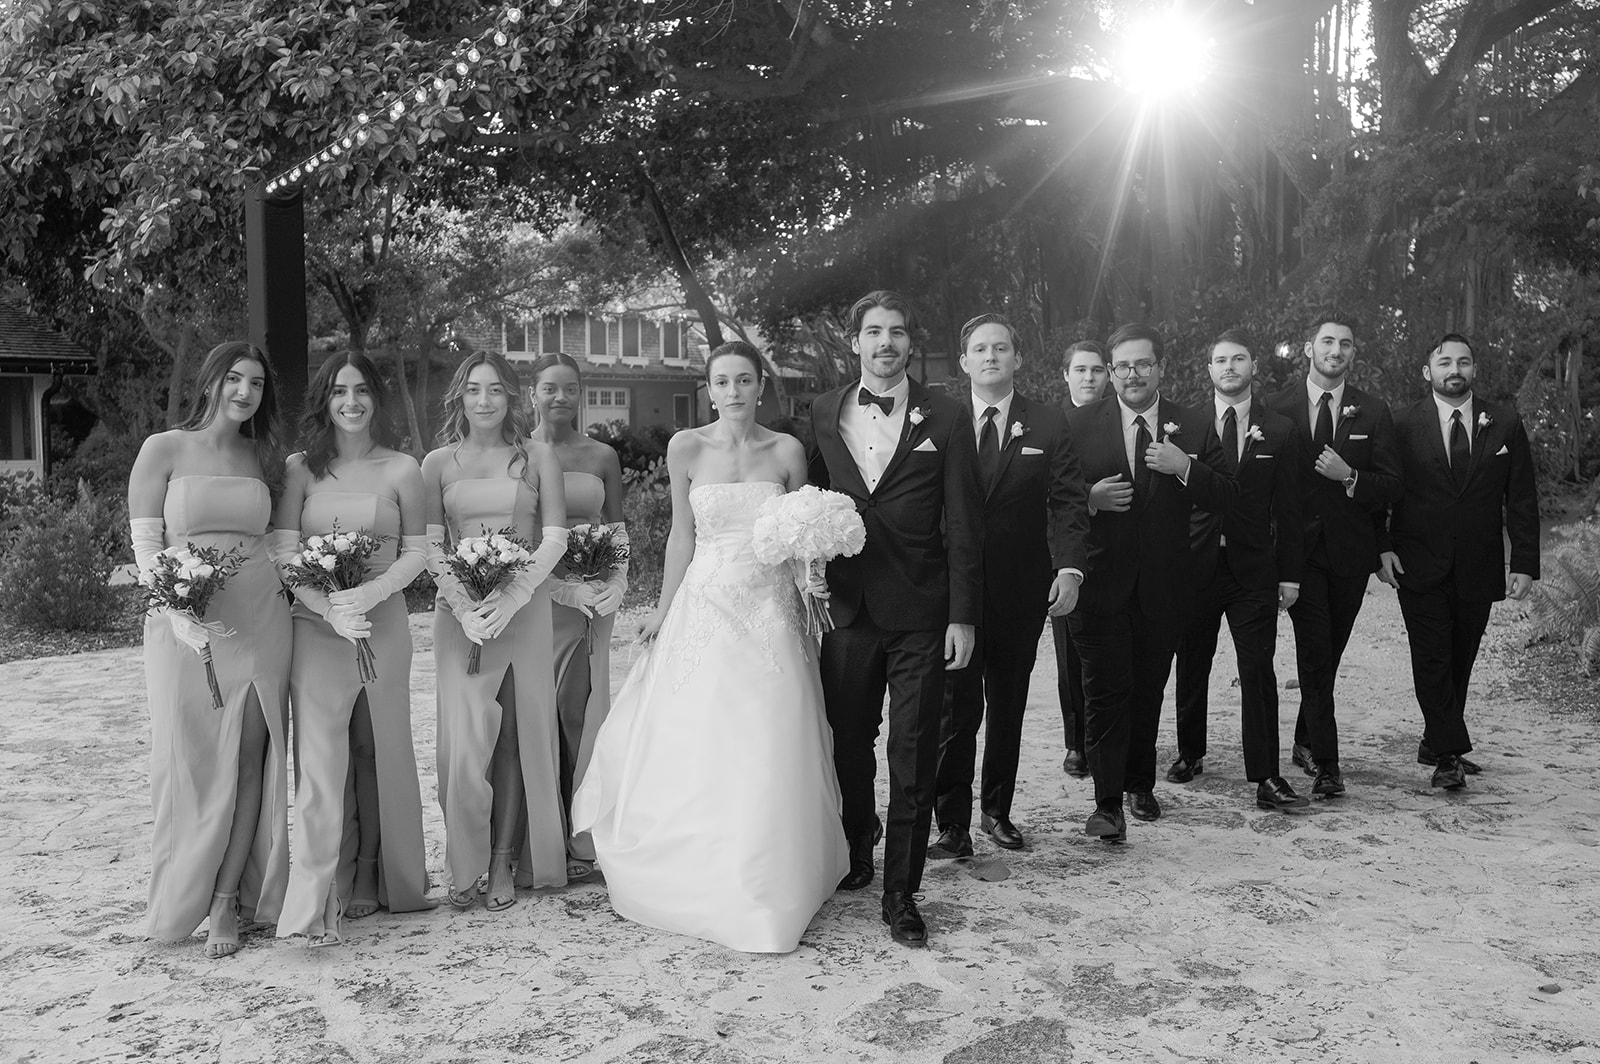 Miami Florida wedding photographer who loves to capture love stories
